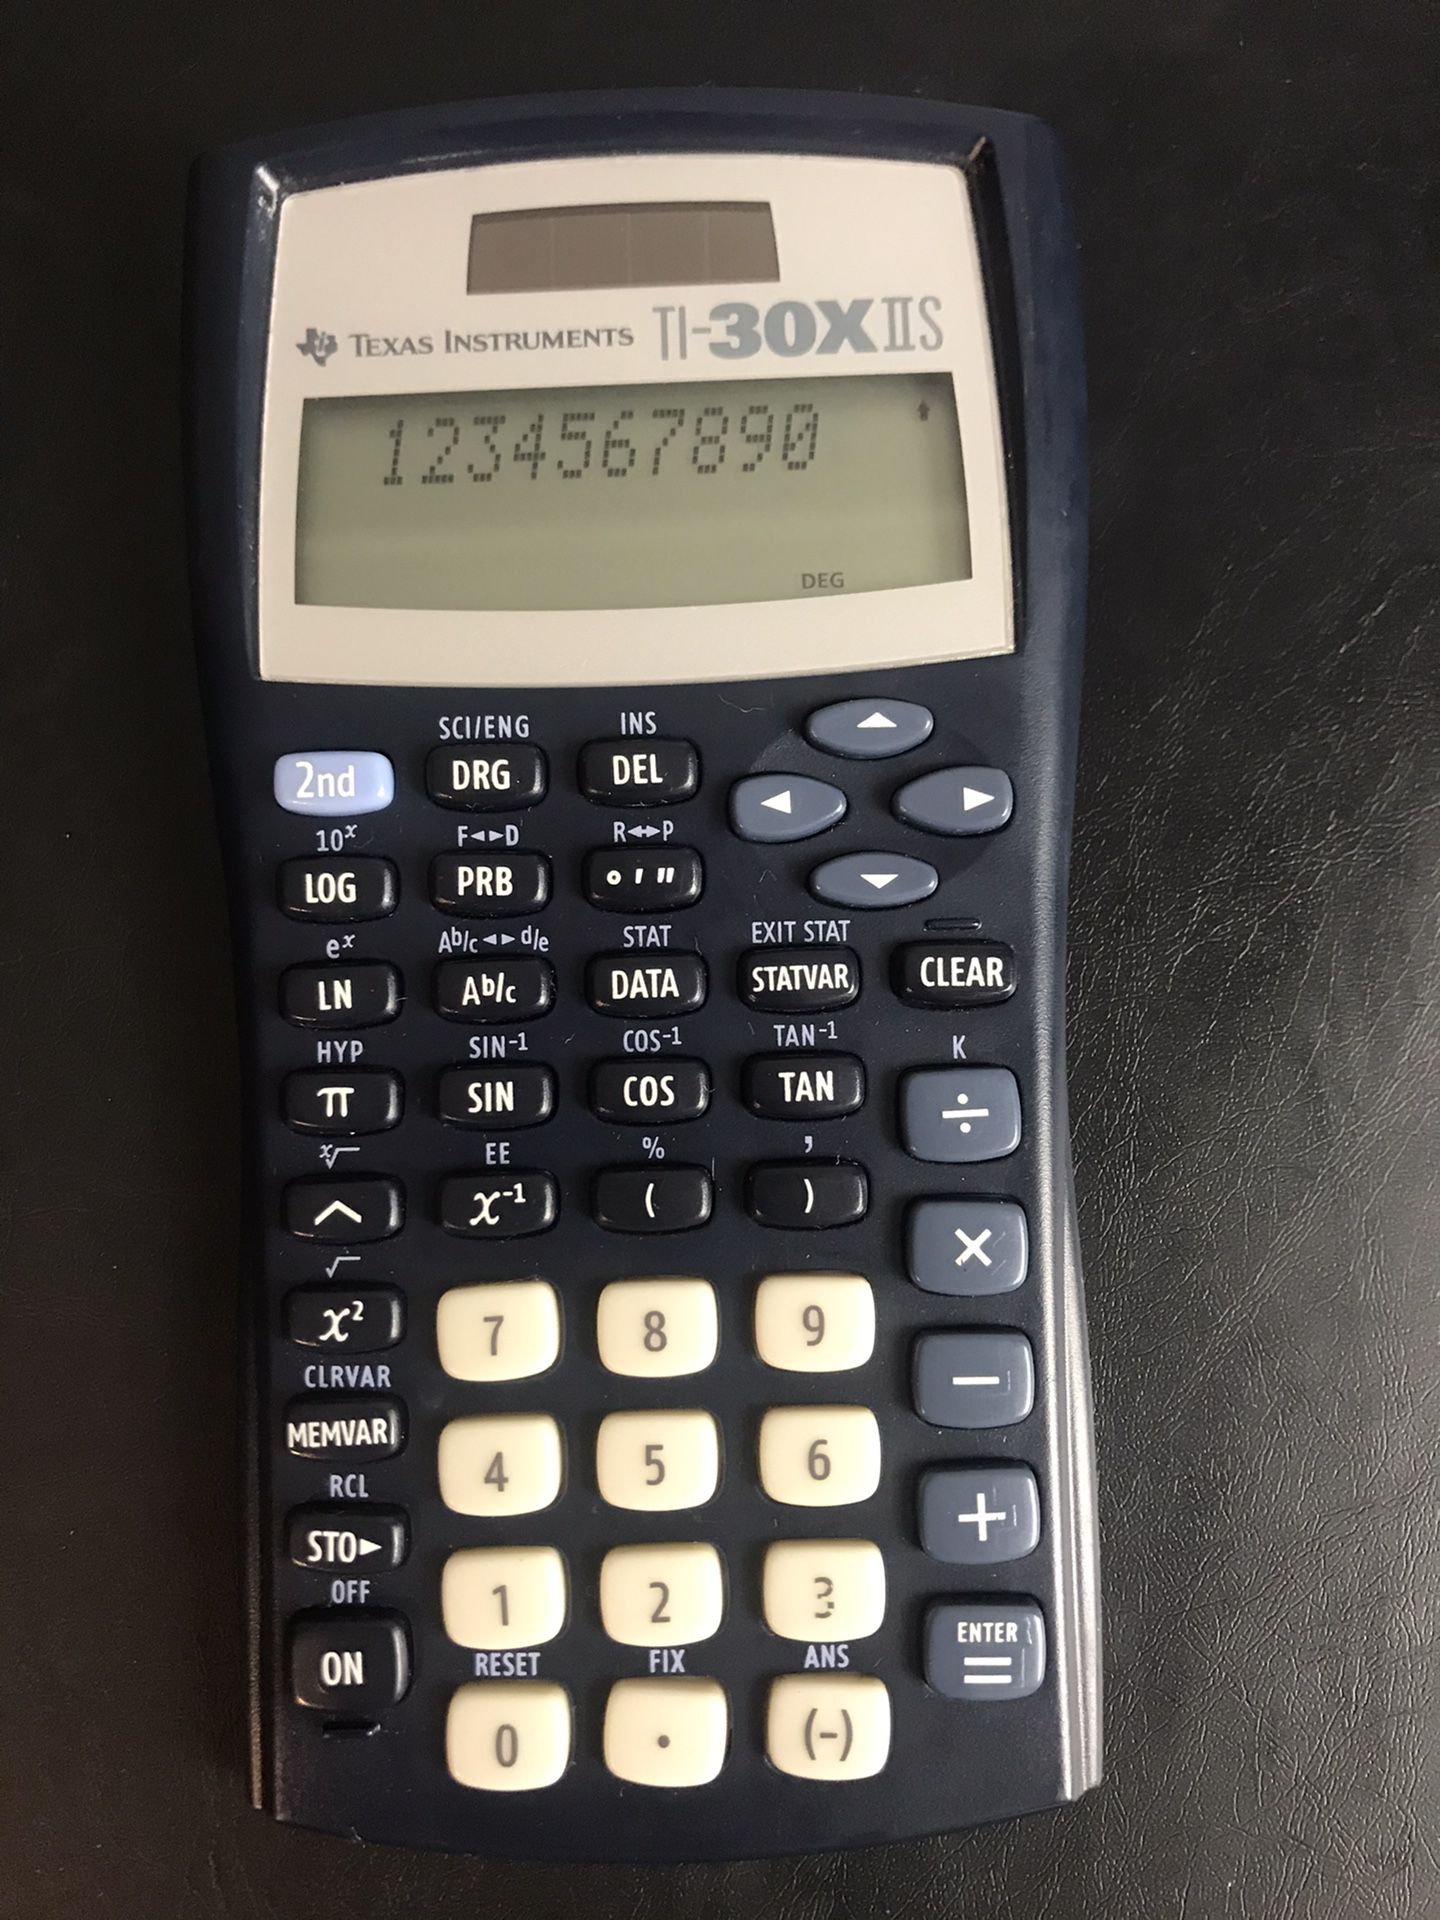 Texas Instruments TI-30X IIS Scientific Calculator - Black